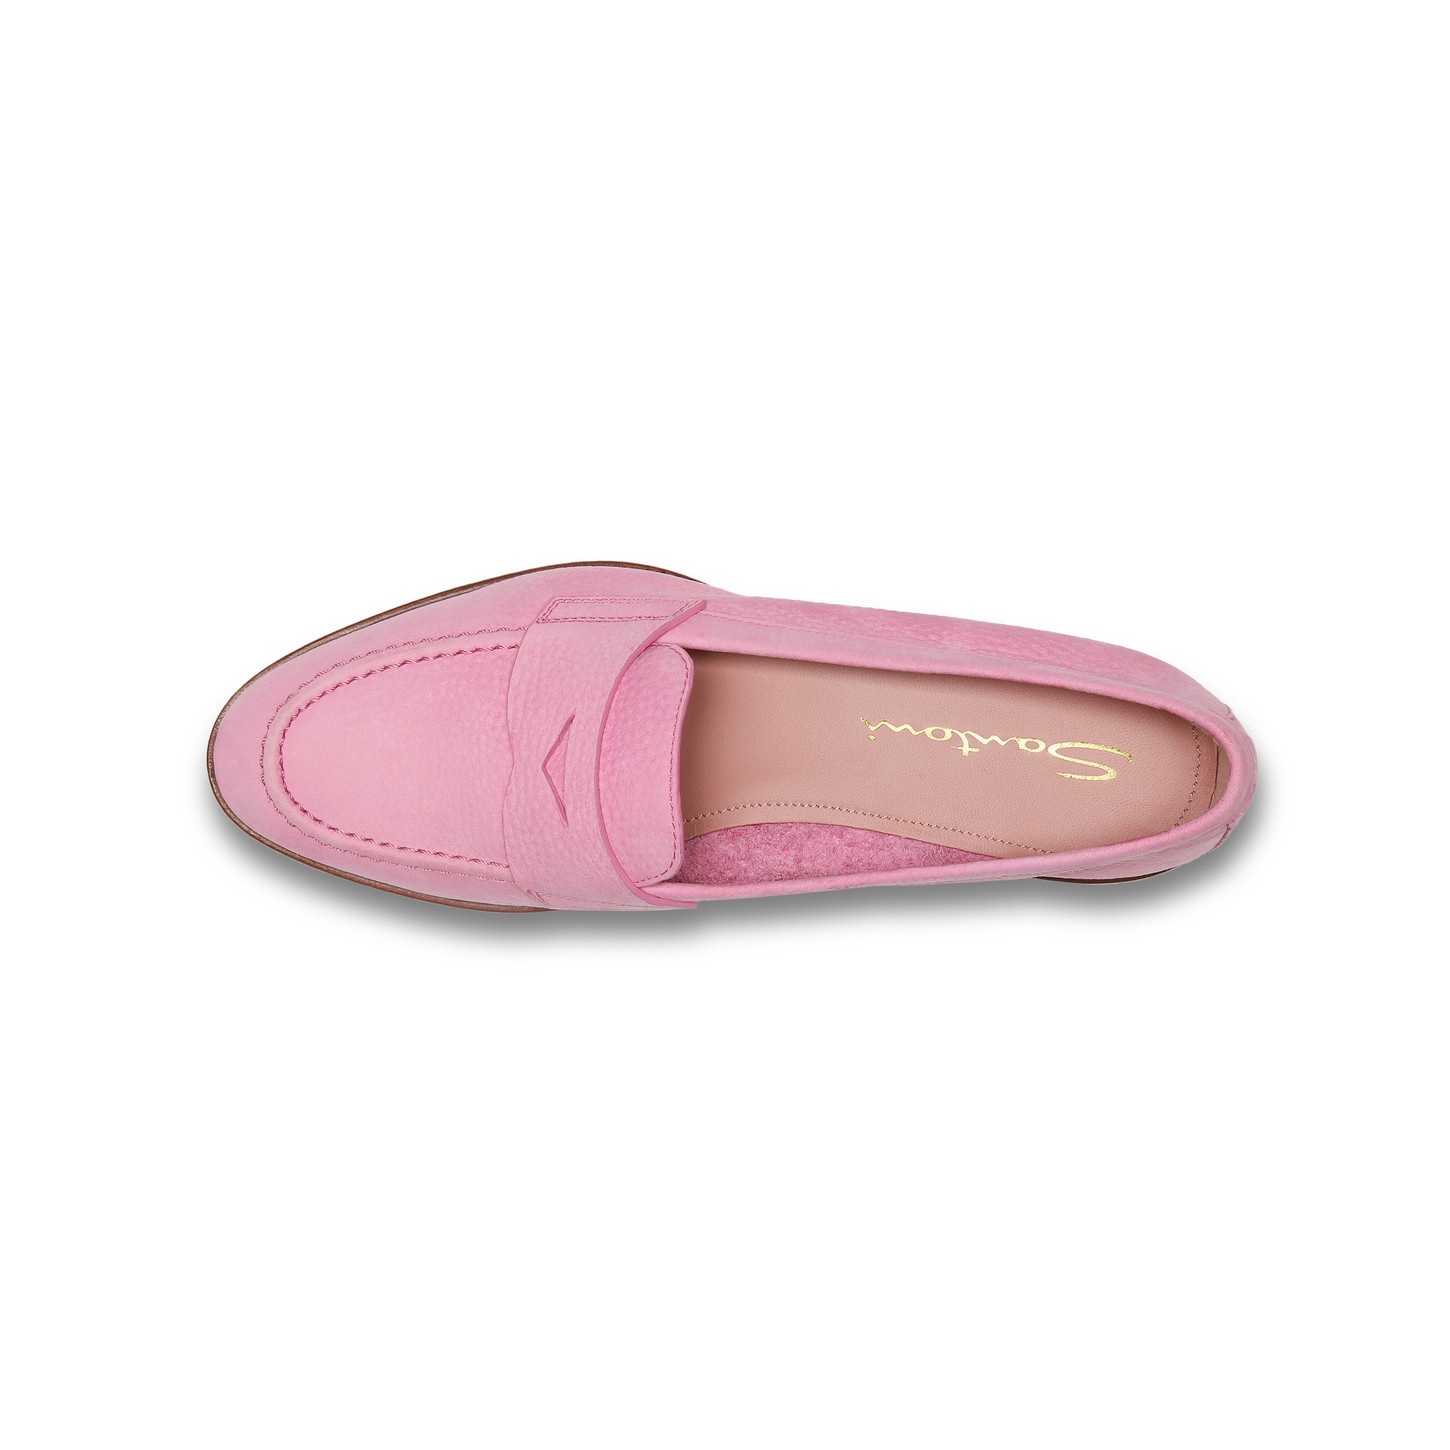 Women’s pink nubuck penny loafer - 5